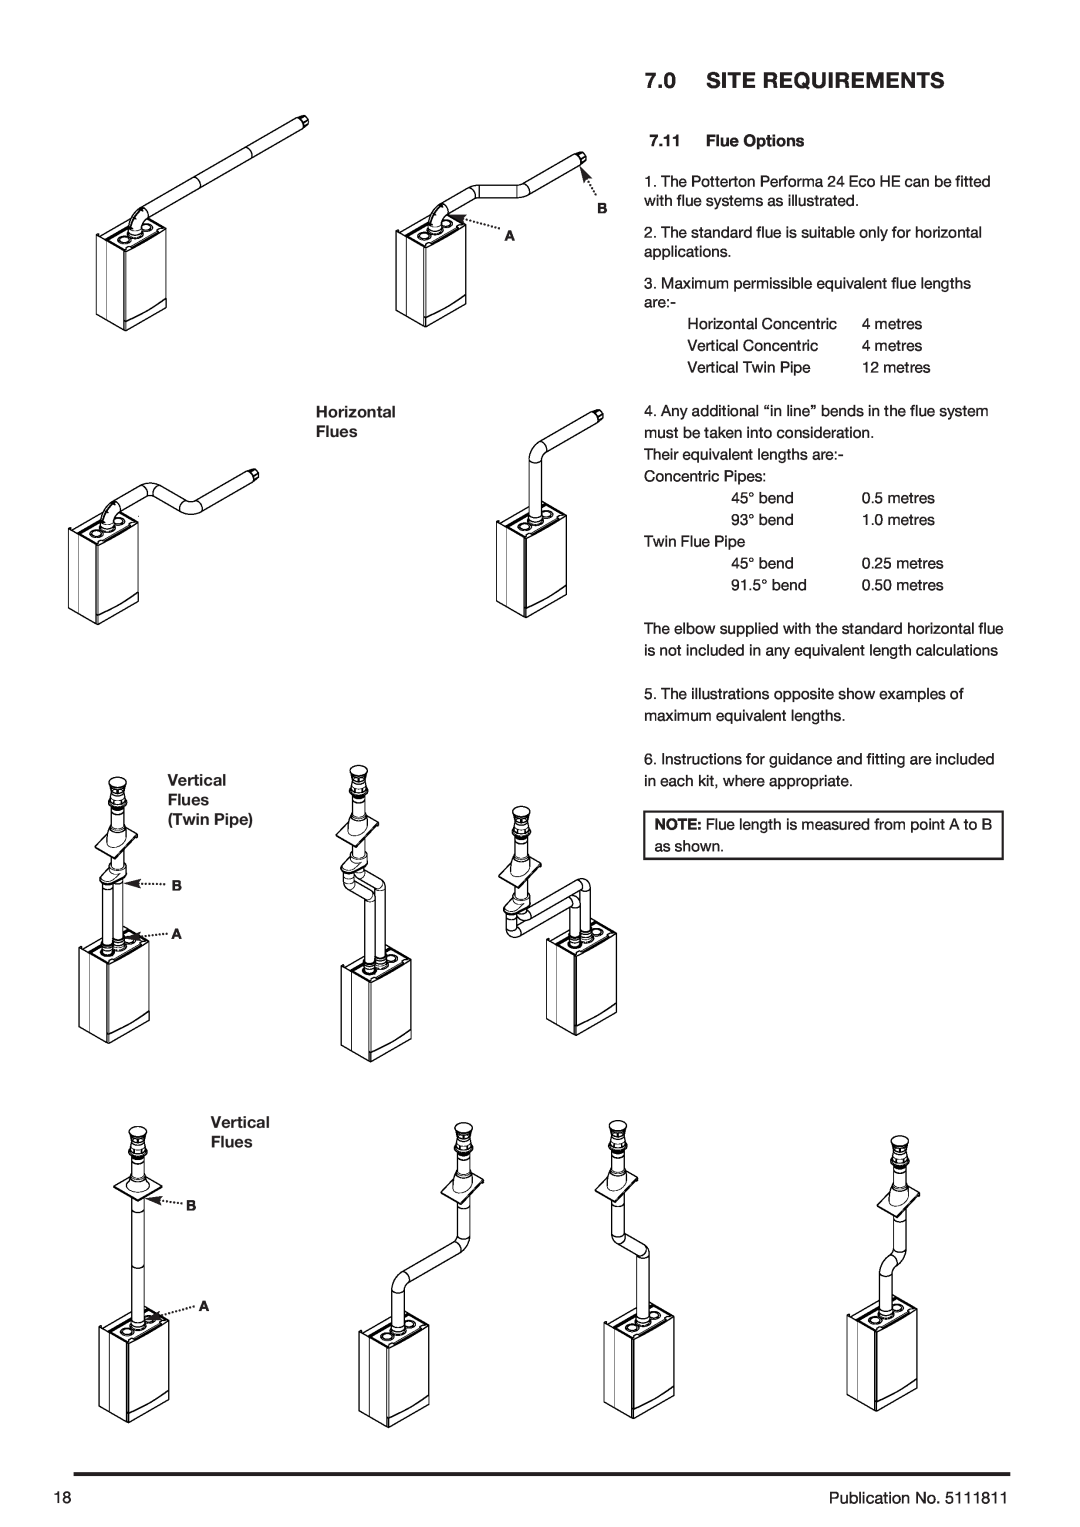 Baxi Potterton 24 Eco HE manual Site Requirements, Horizontal Flues Vertical Flues Twin Pipe, Flue Options 